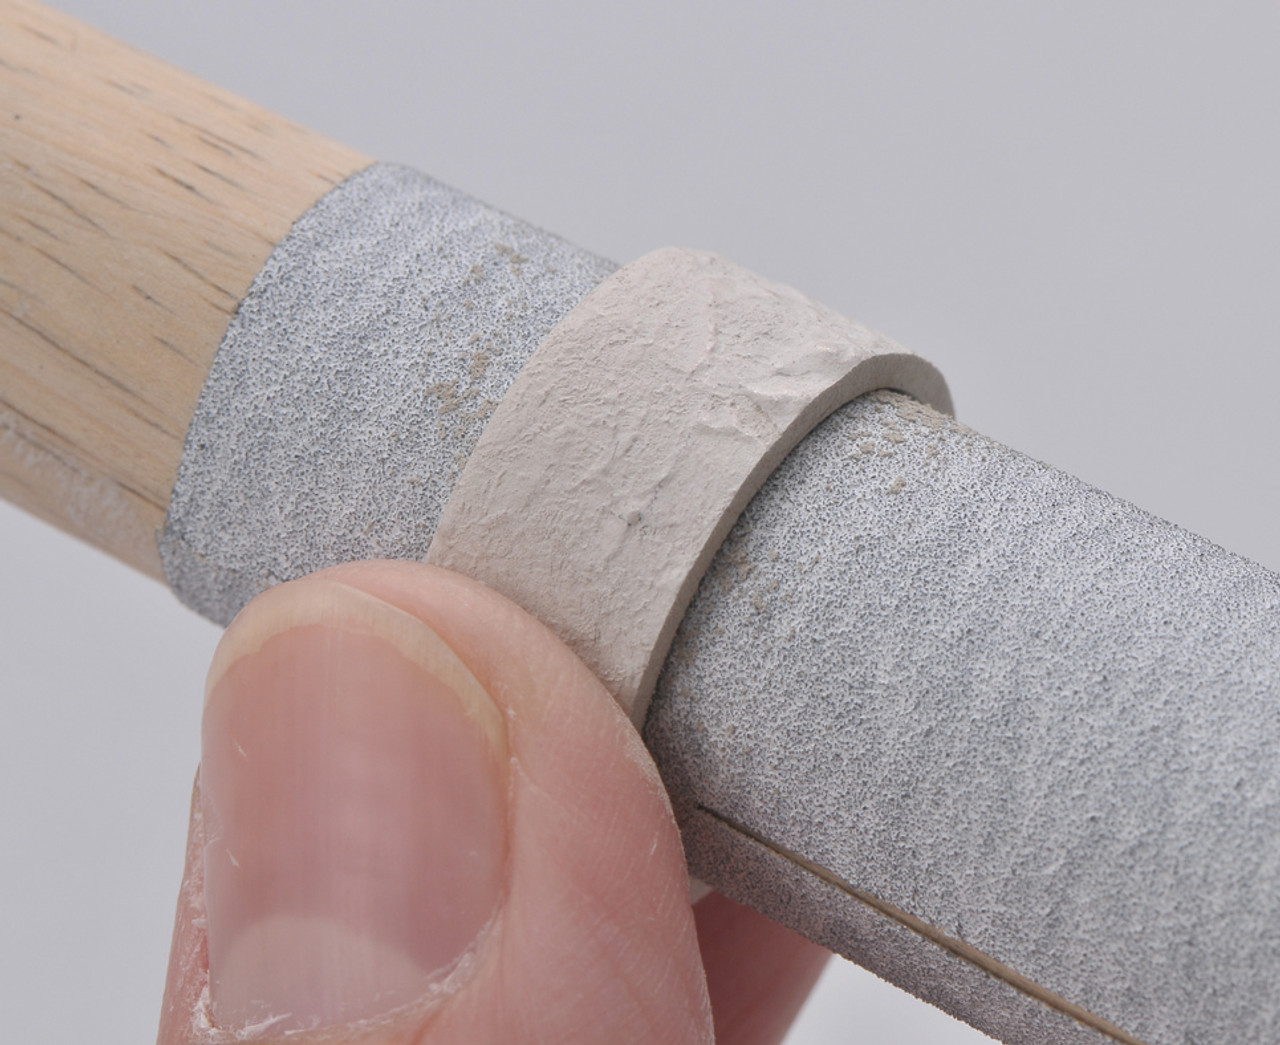 3M Self-Adhesive Sandpaper Roll - 400 grit